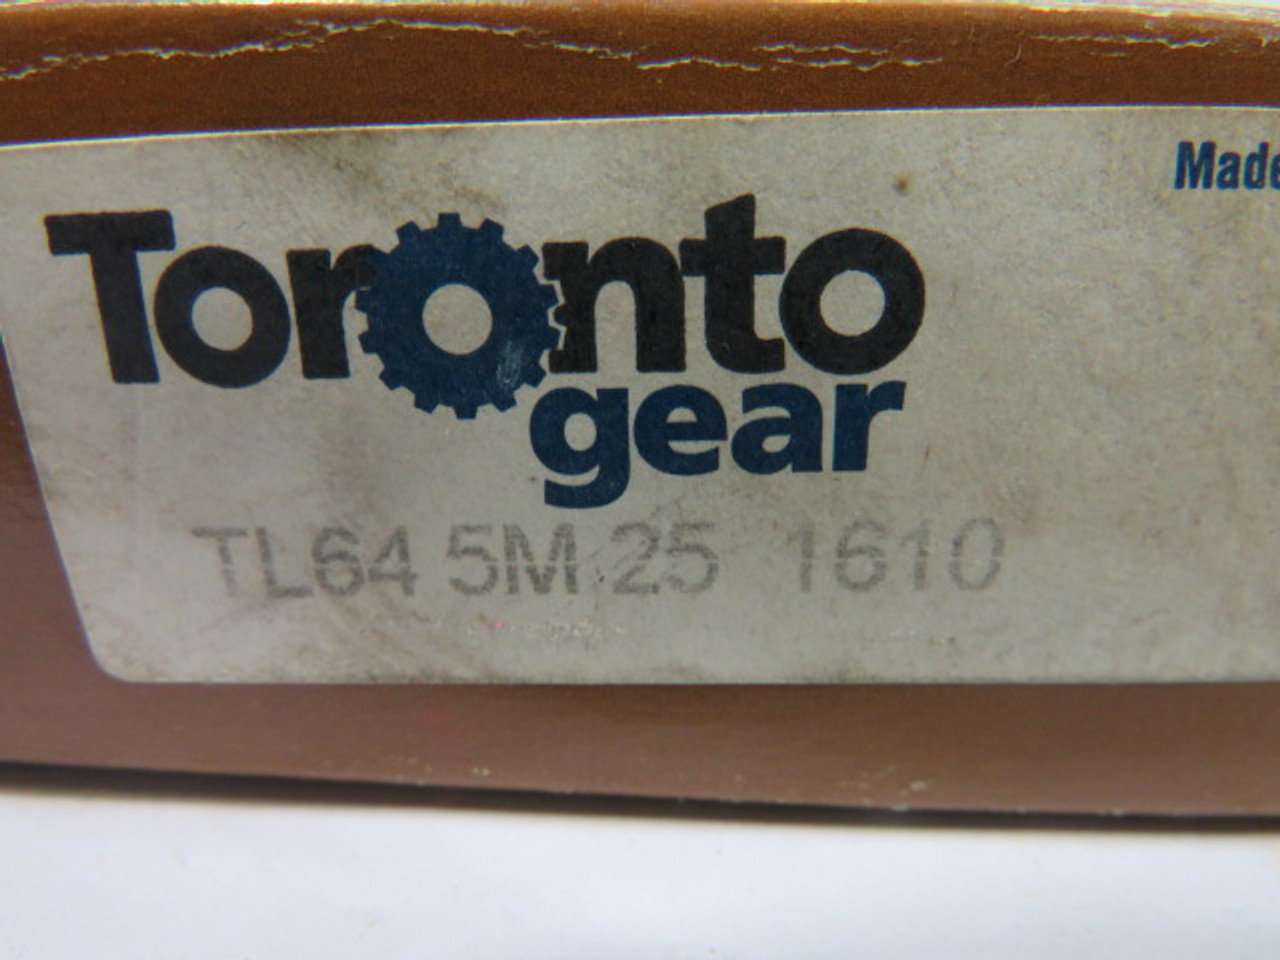 Toronto Gear 64-5M-25-1610 Timing Belt Pulley 0.5-1.625" B 64 T ! NEW !